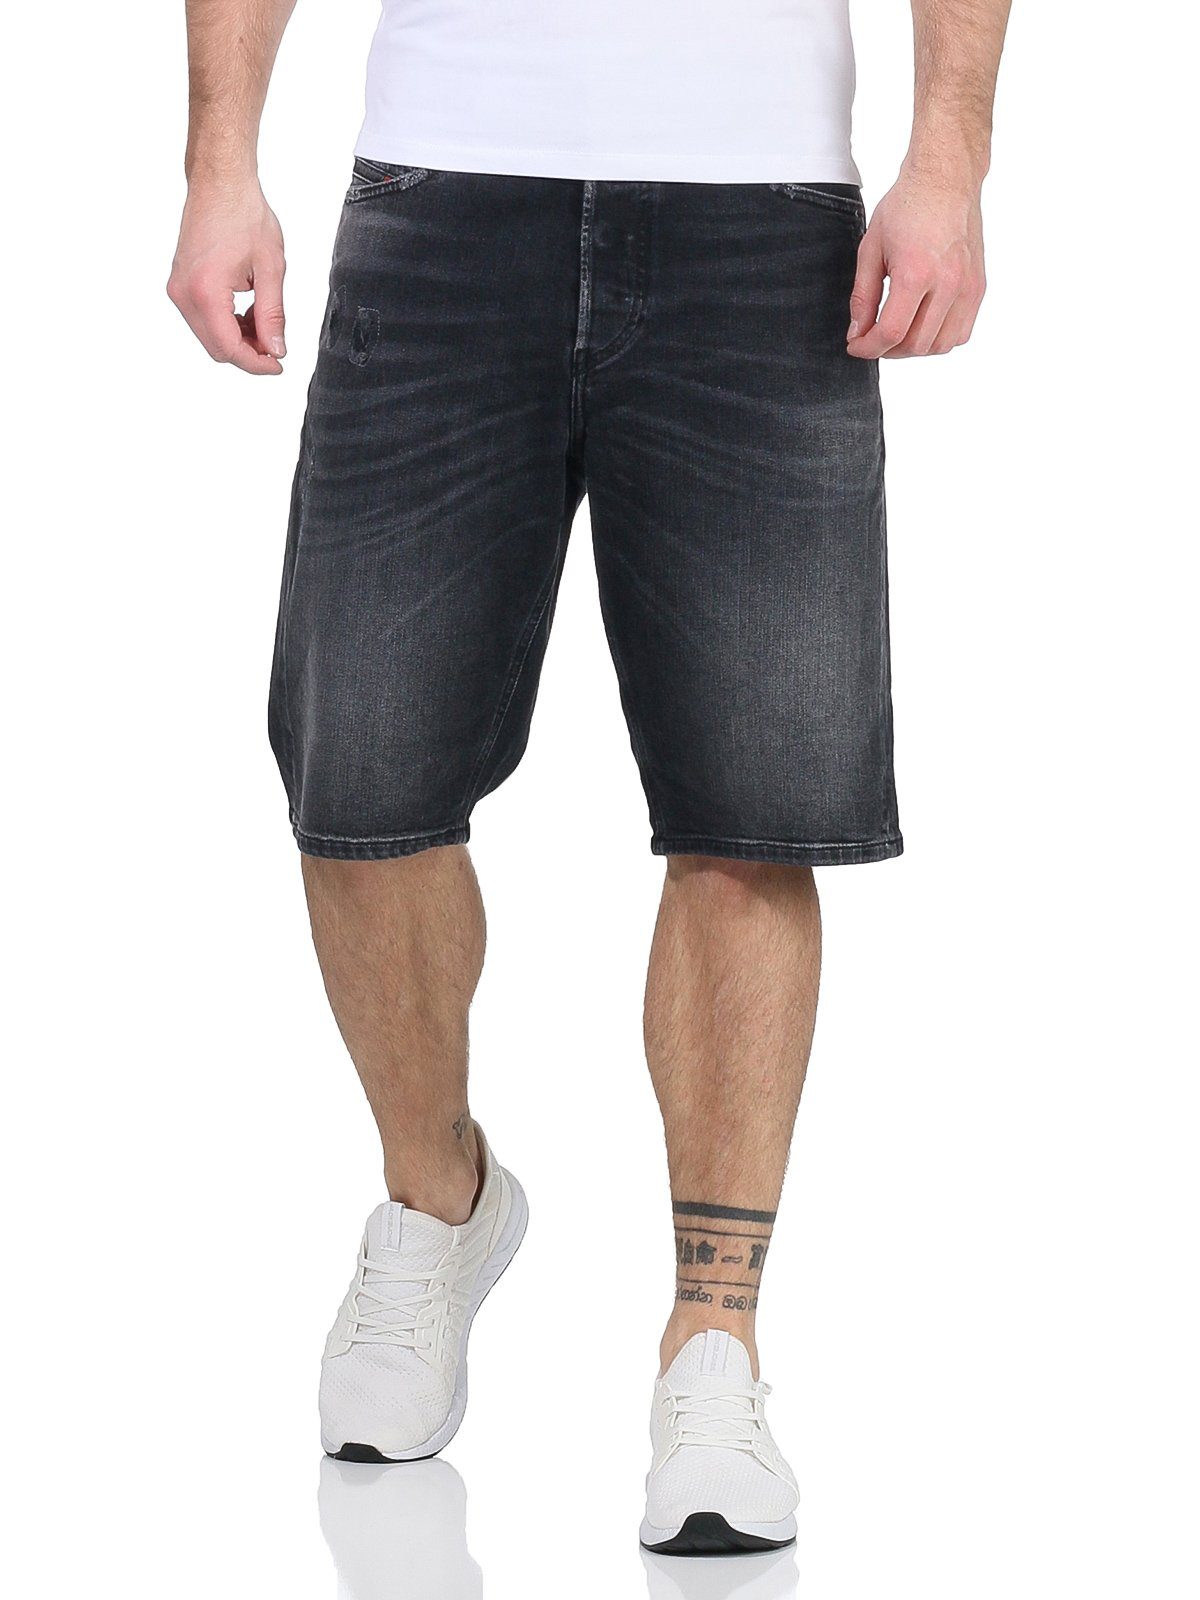 Jeans dezenter RG48R R930L kurze Jeansshorts Shorts, Shorts Used-Look Herren Kroshort Anthrazit Hose Diesel